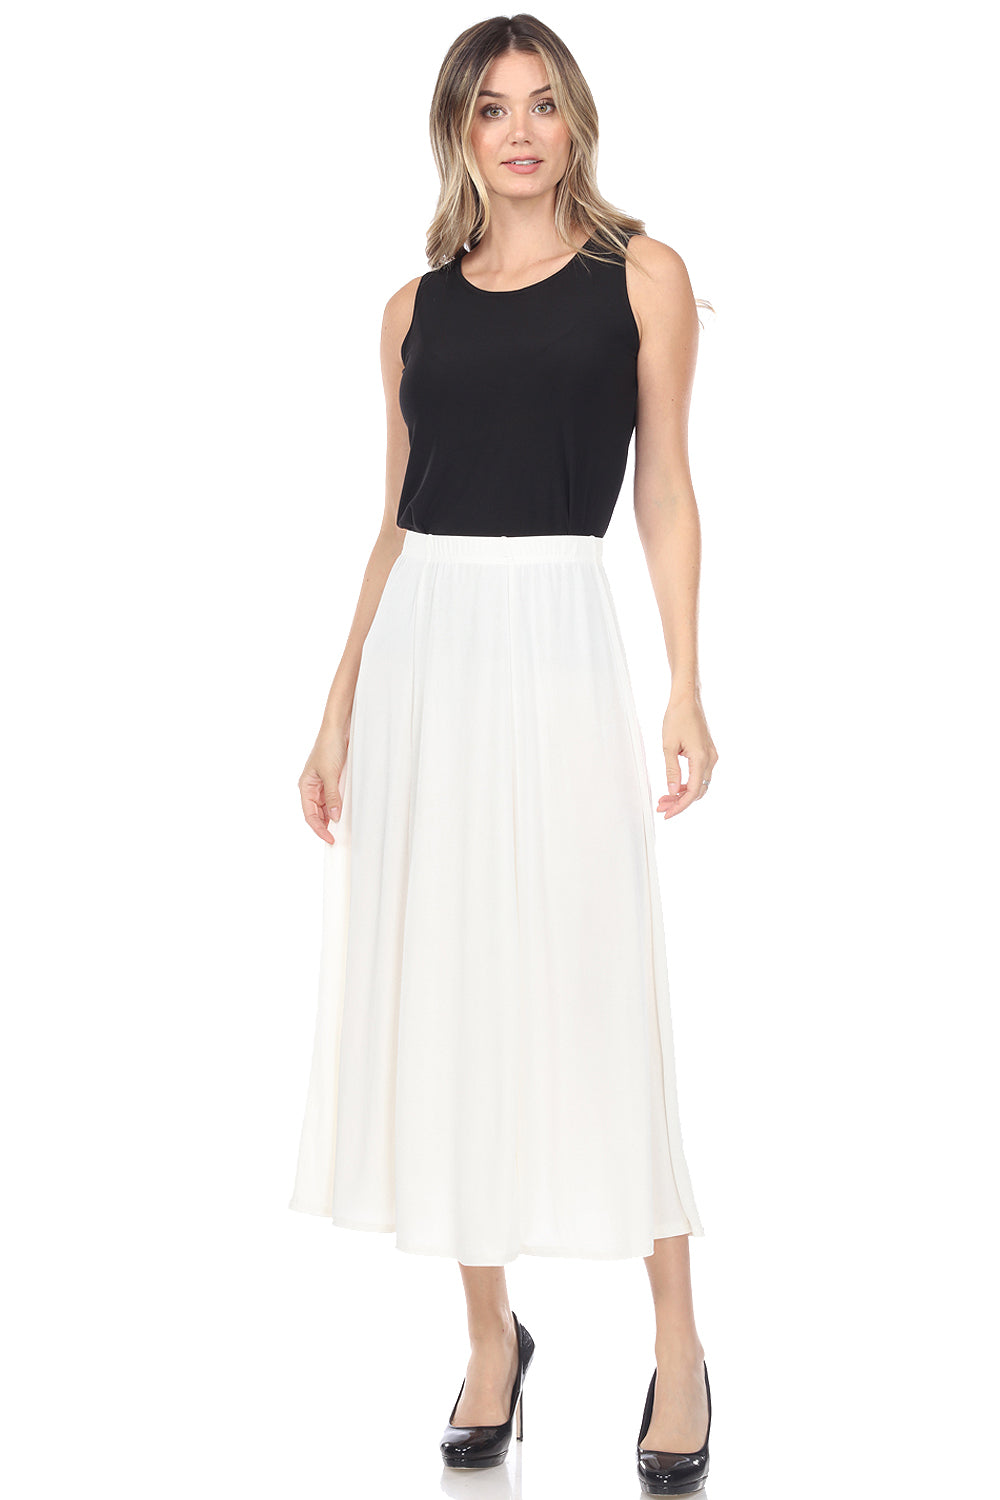 Jostar Women's Stretchy Flare Skirt, 602BN - Jostar Online